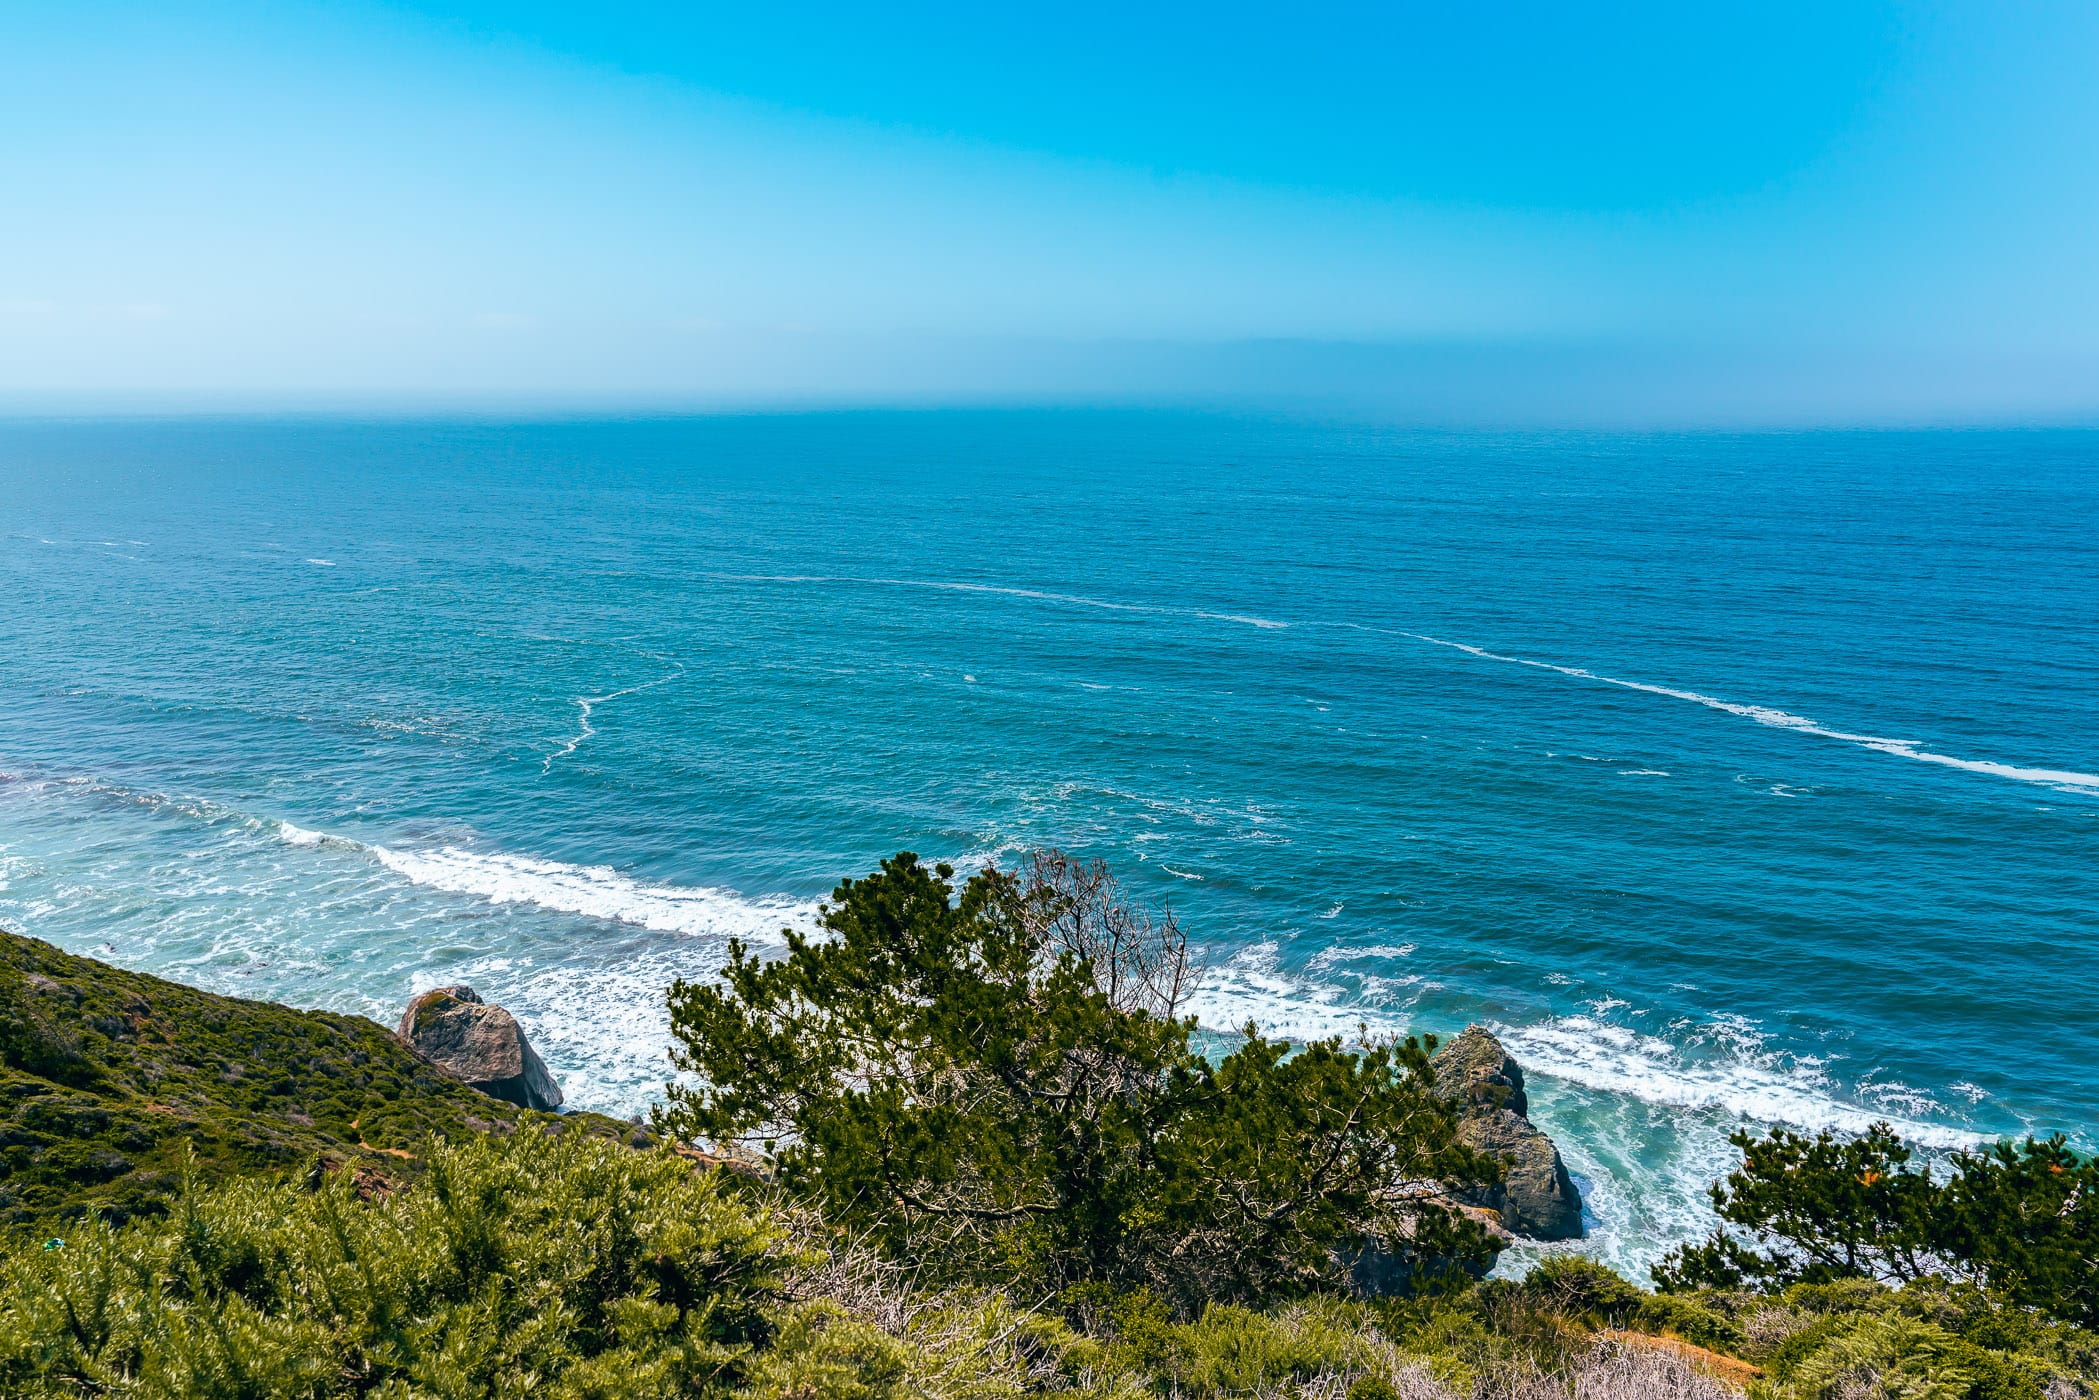 The Pacific Ocean stretches to the horizon as seen from Red Rock Beach near Stinson Beach, California.